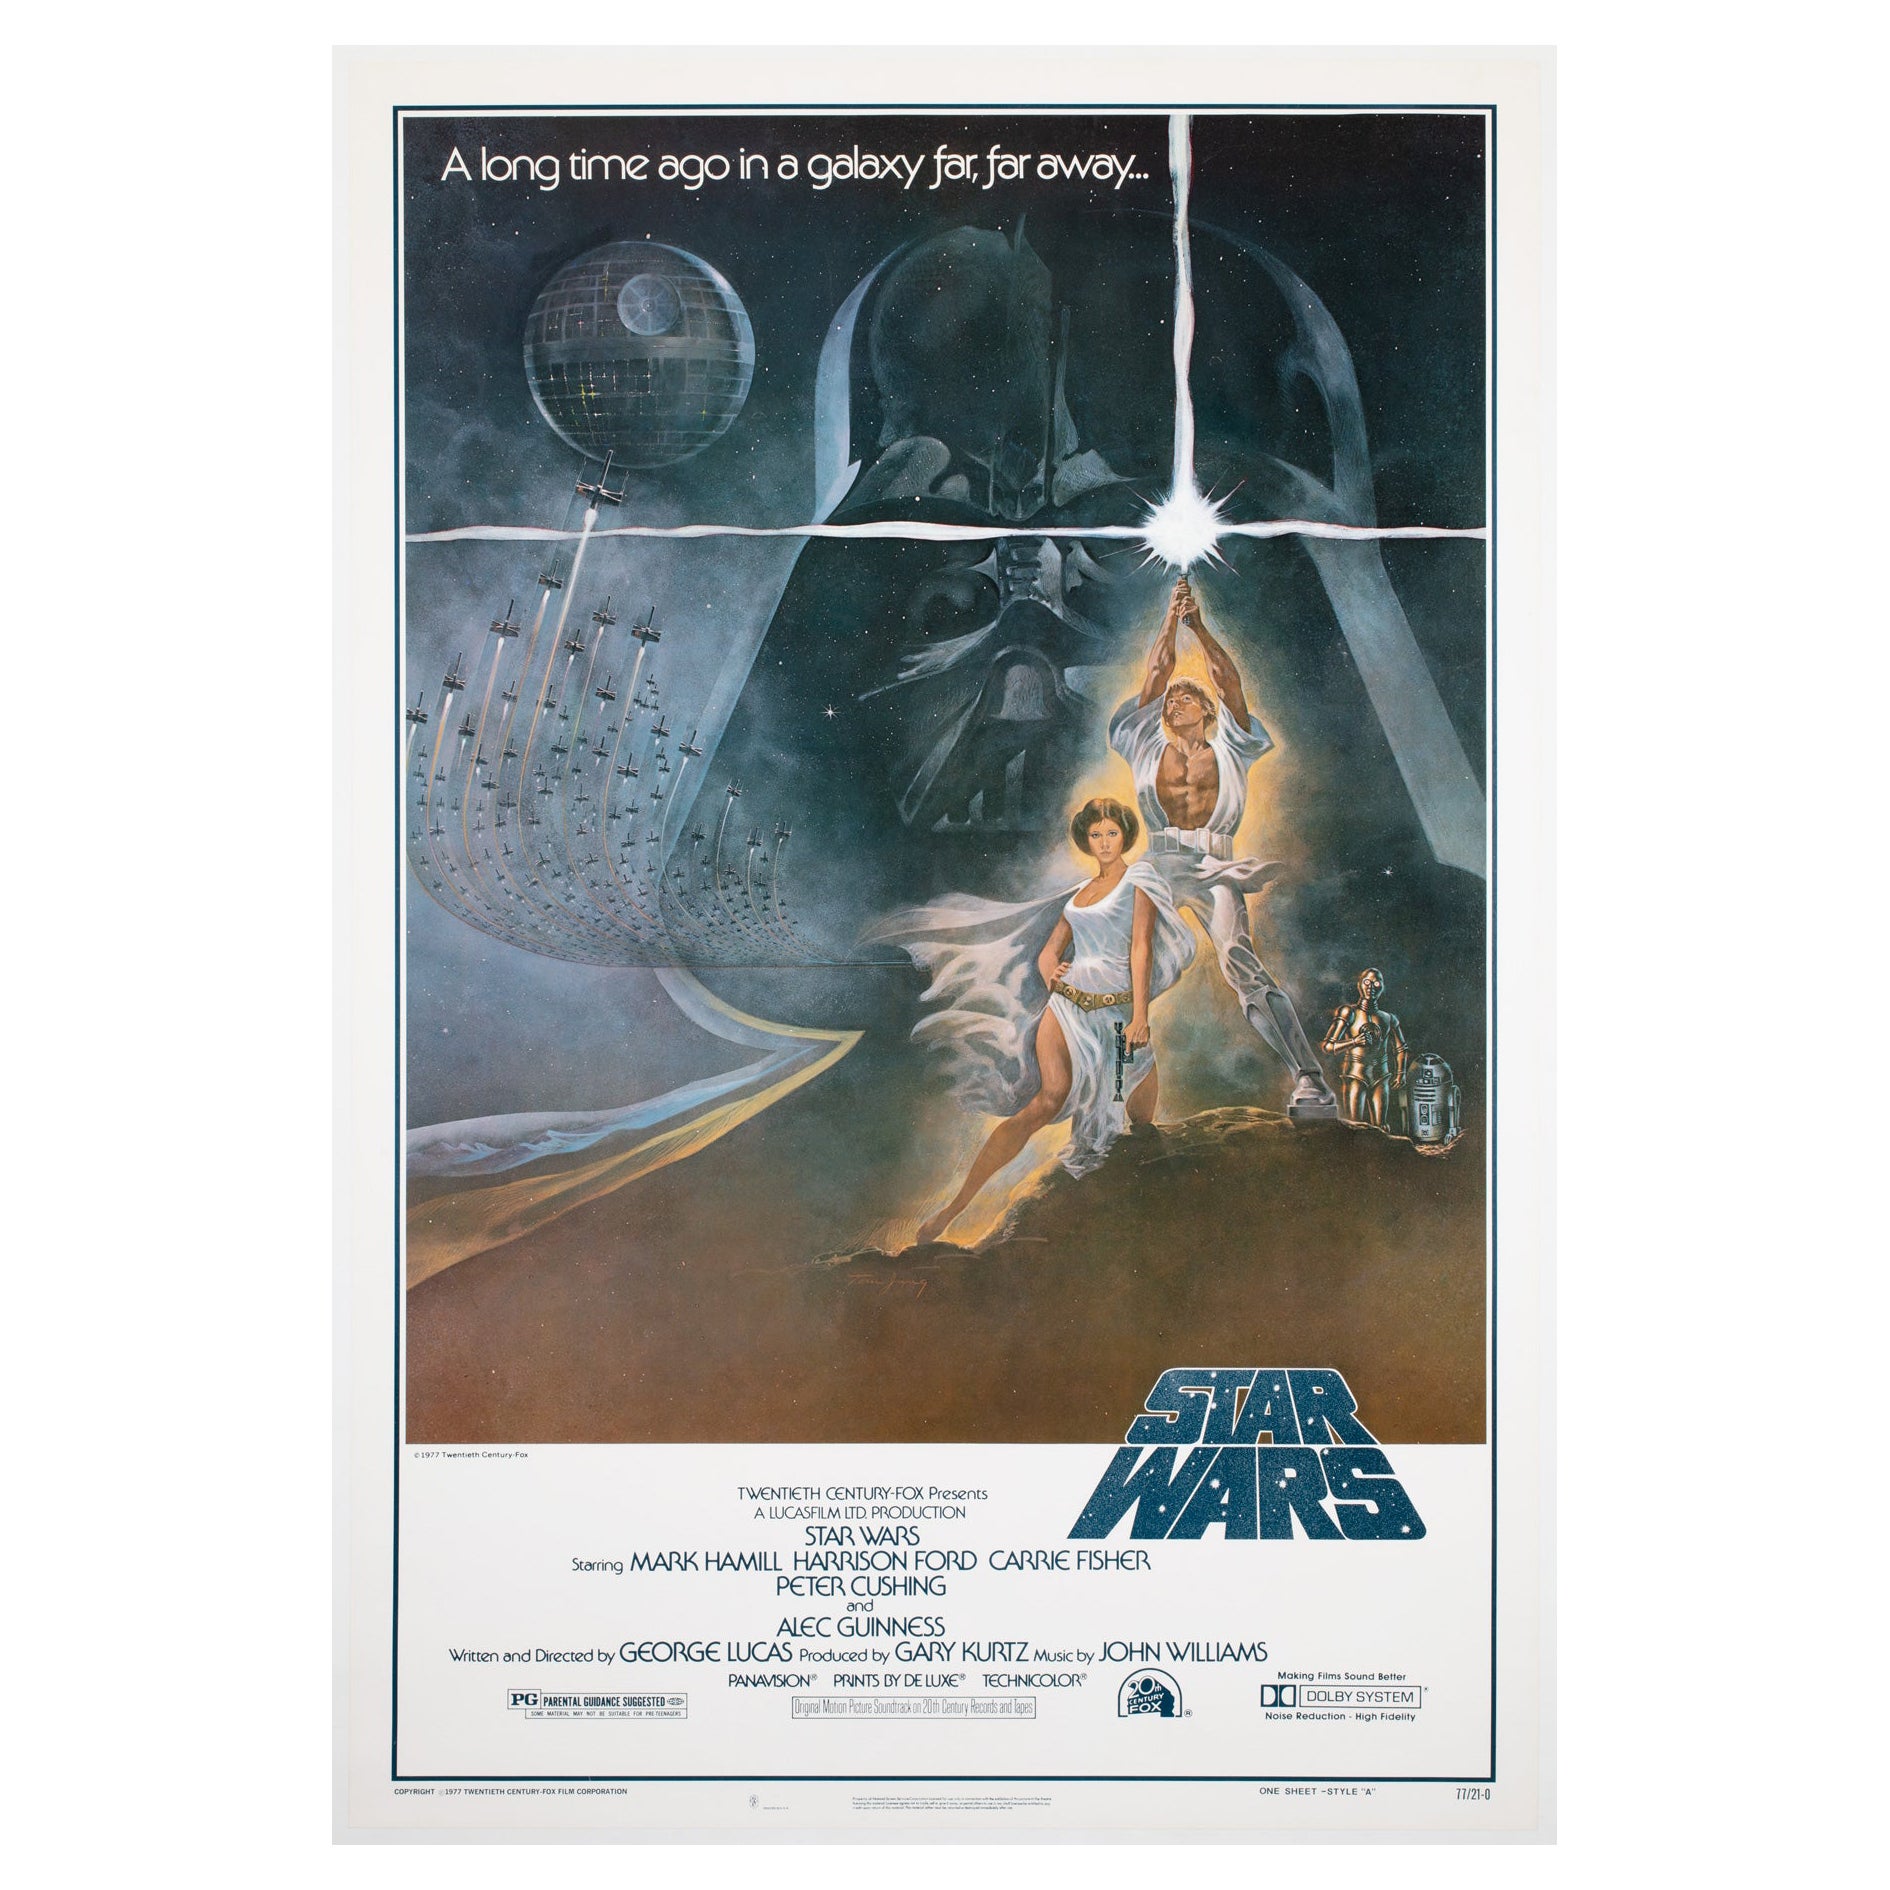 STAR WARS 1977 International US Film Movie Poster, 1st Printing, TOM JUNG For Sale